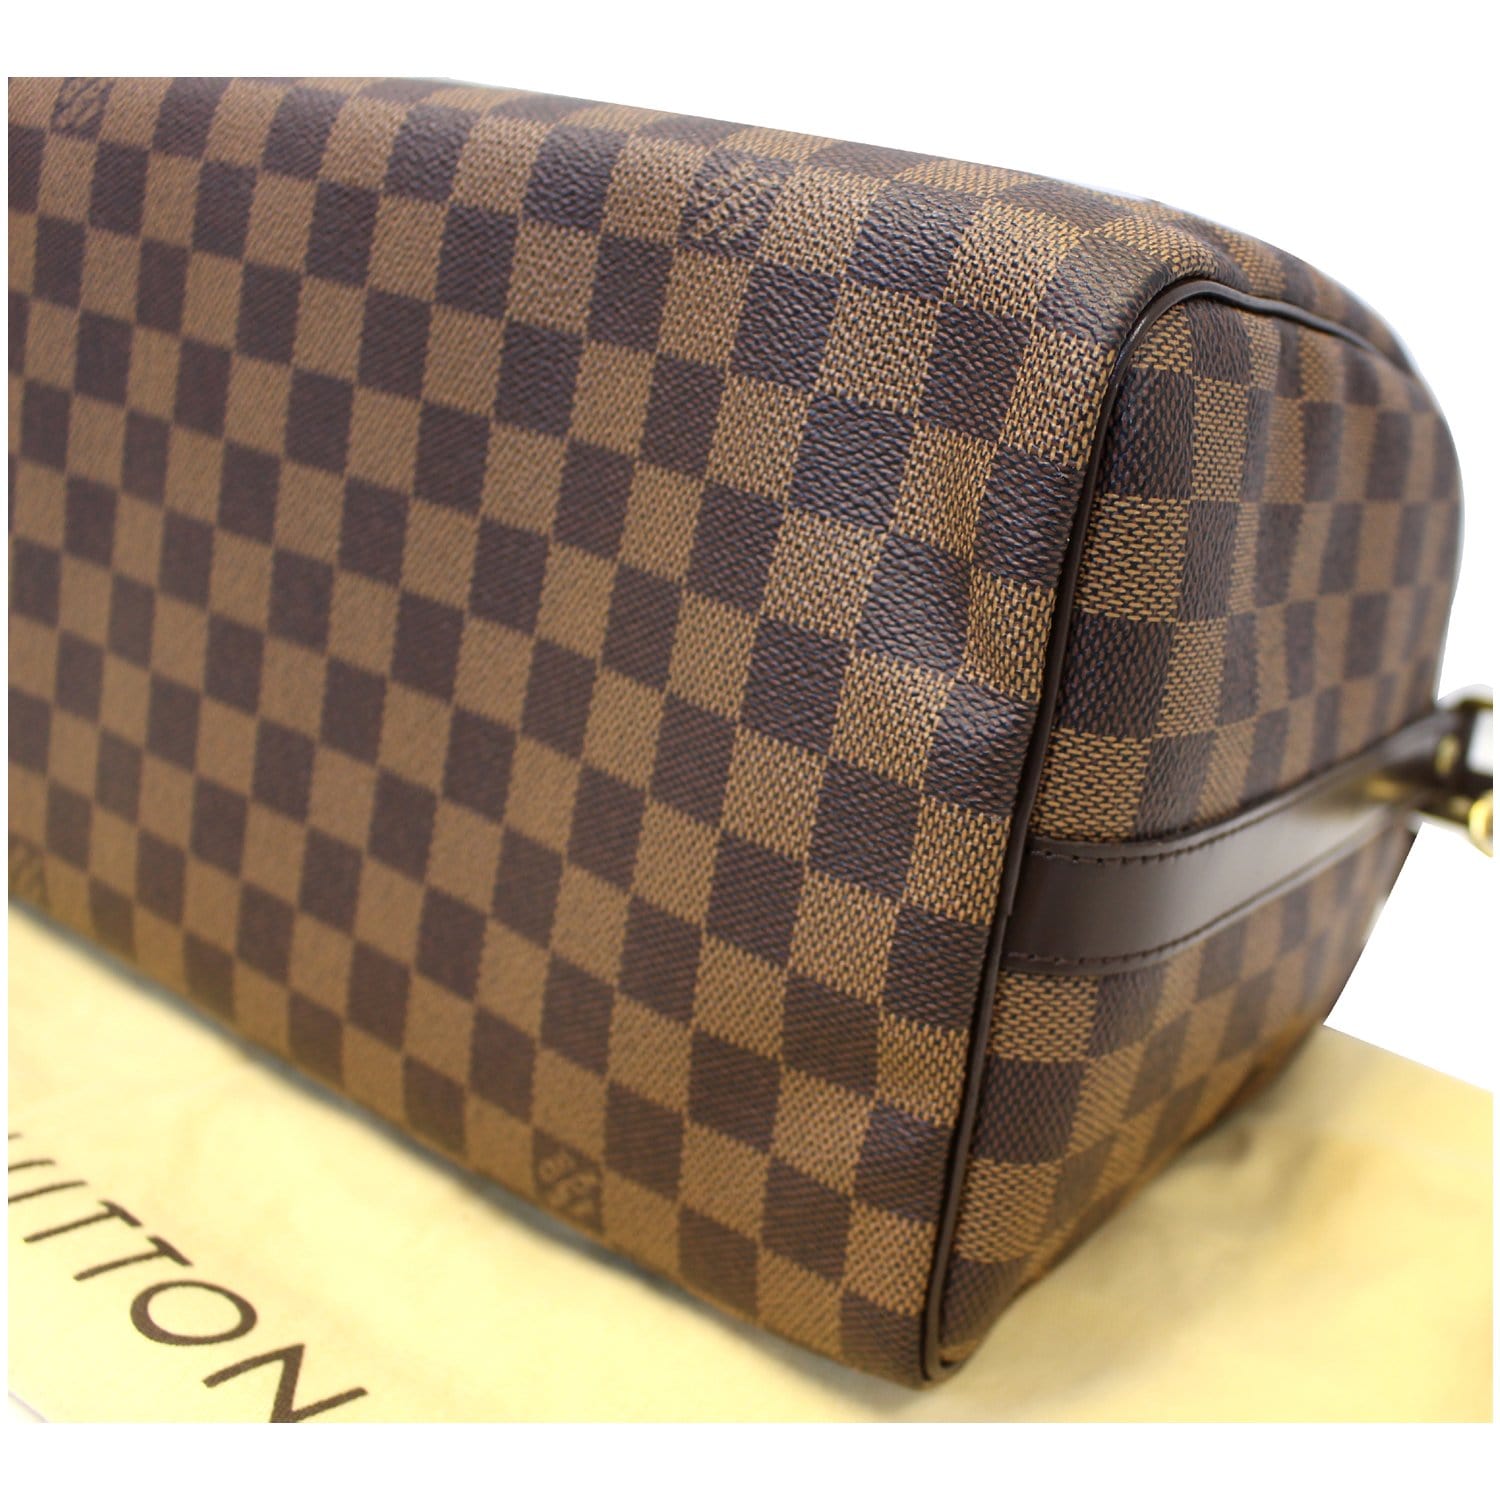 Louis Vuitton // Brown Damier Ebene Speedy Bandoulière 30 Bag